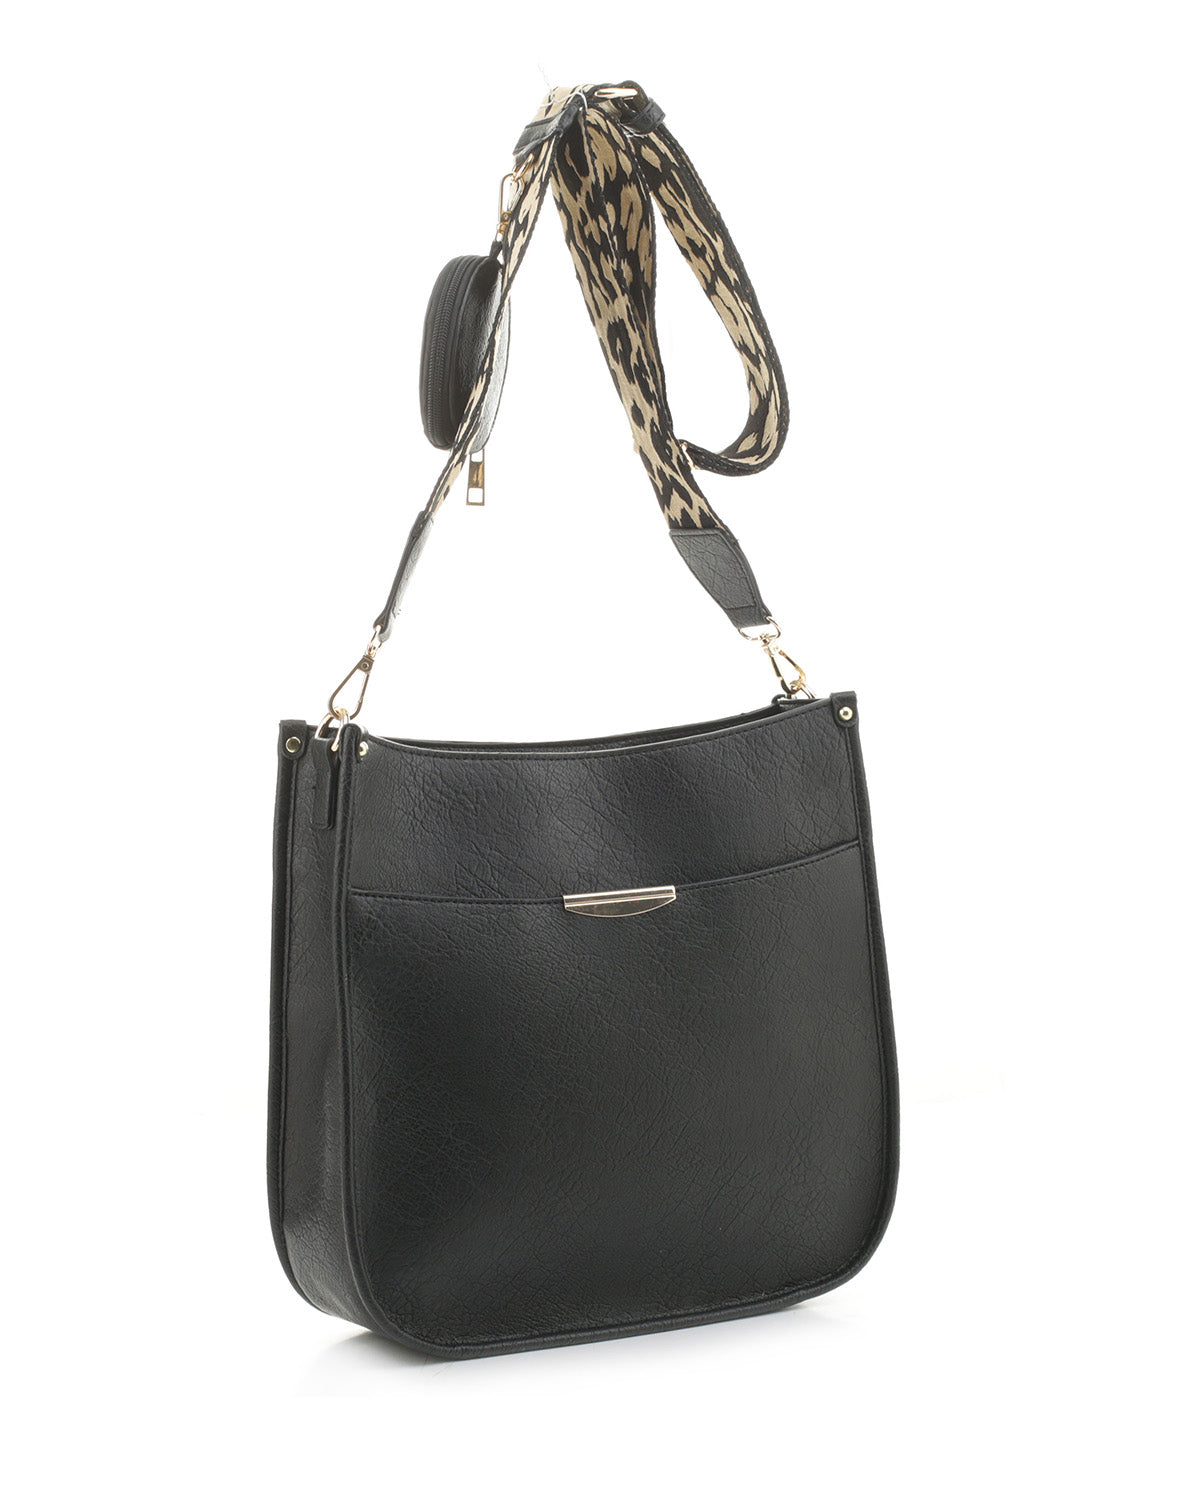 PMDS97160L2 Concealed Carry Leatherette Fashion Messenger Set (2pcs),